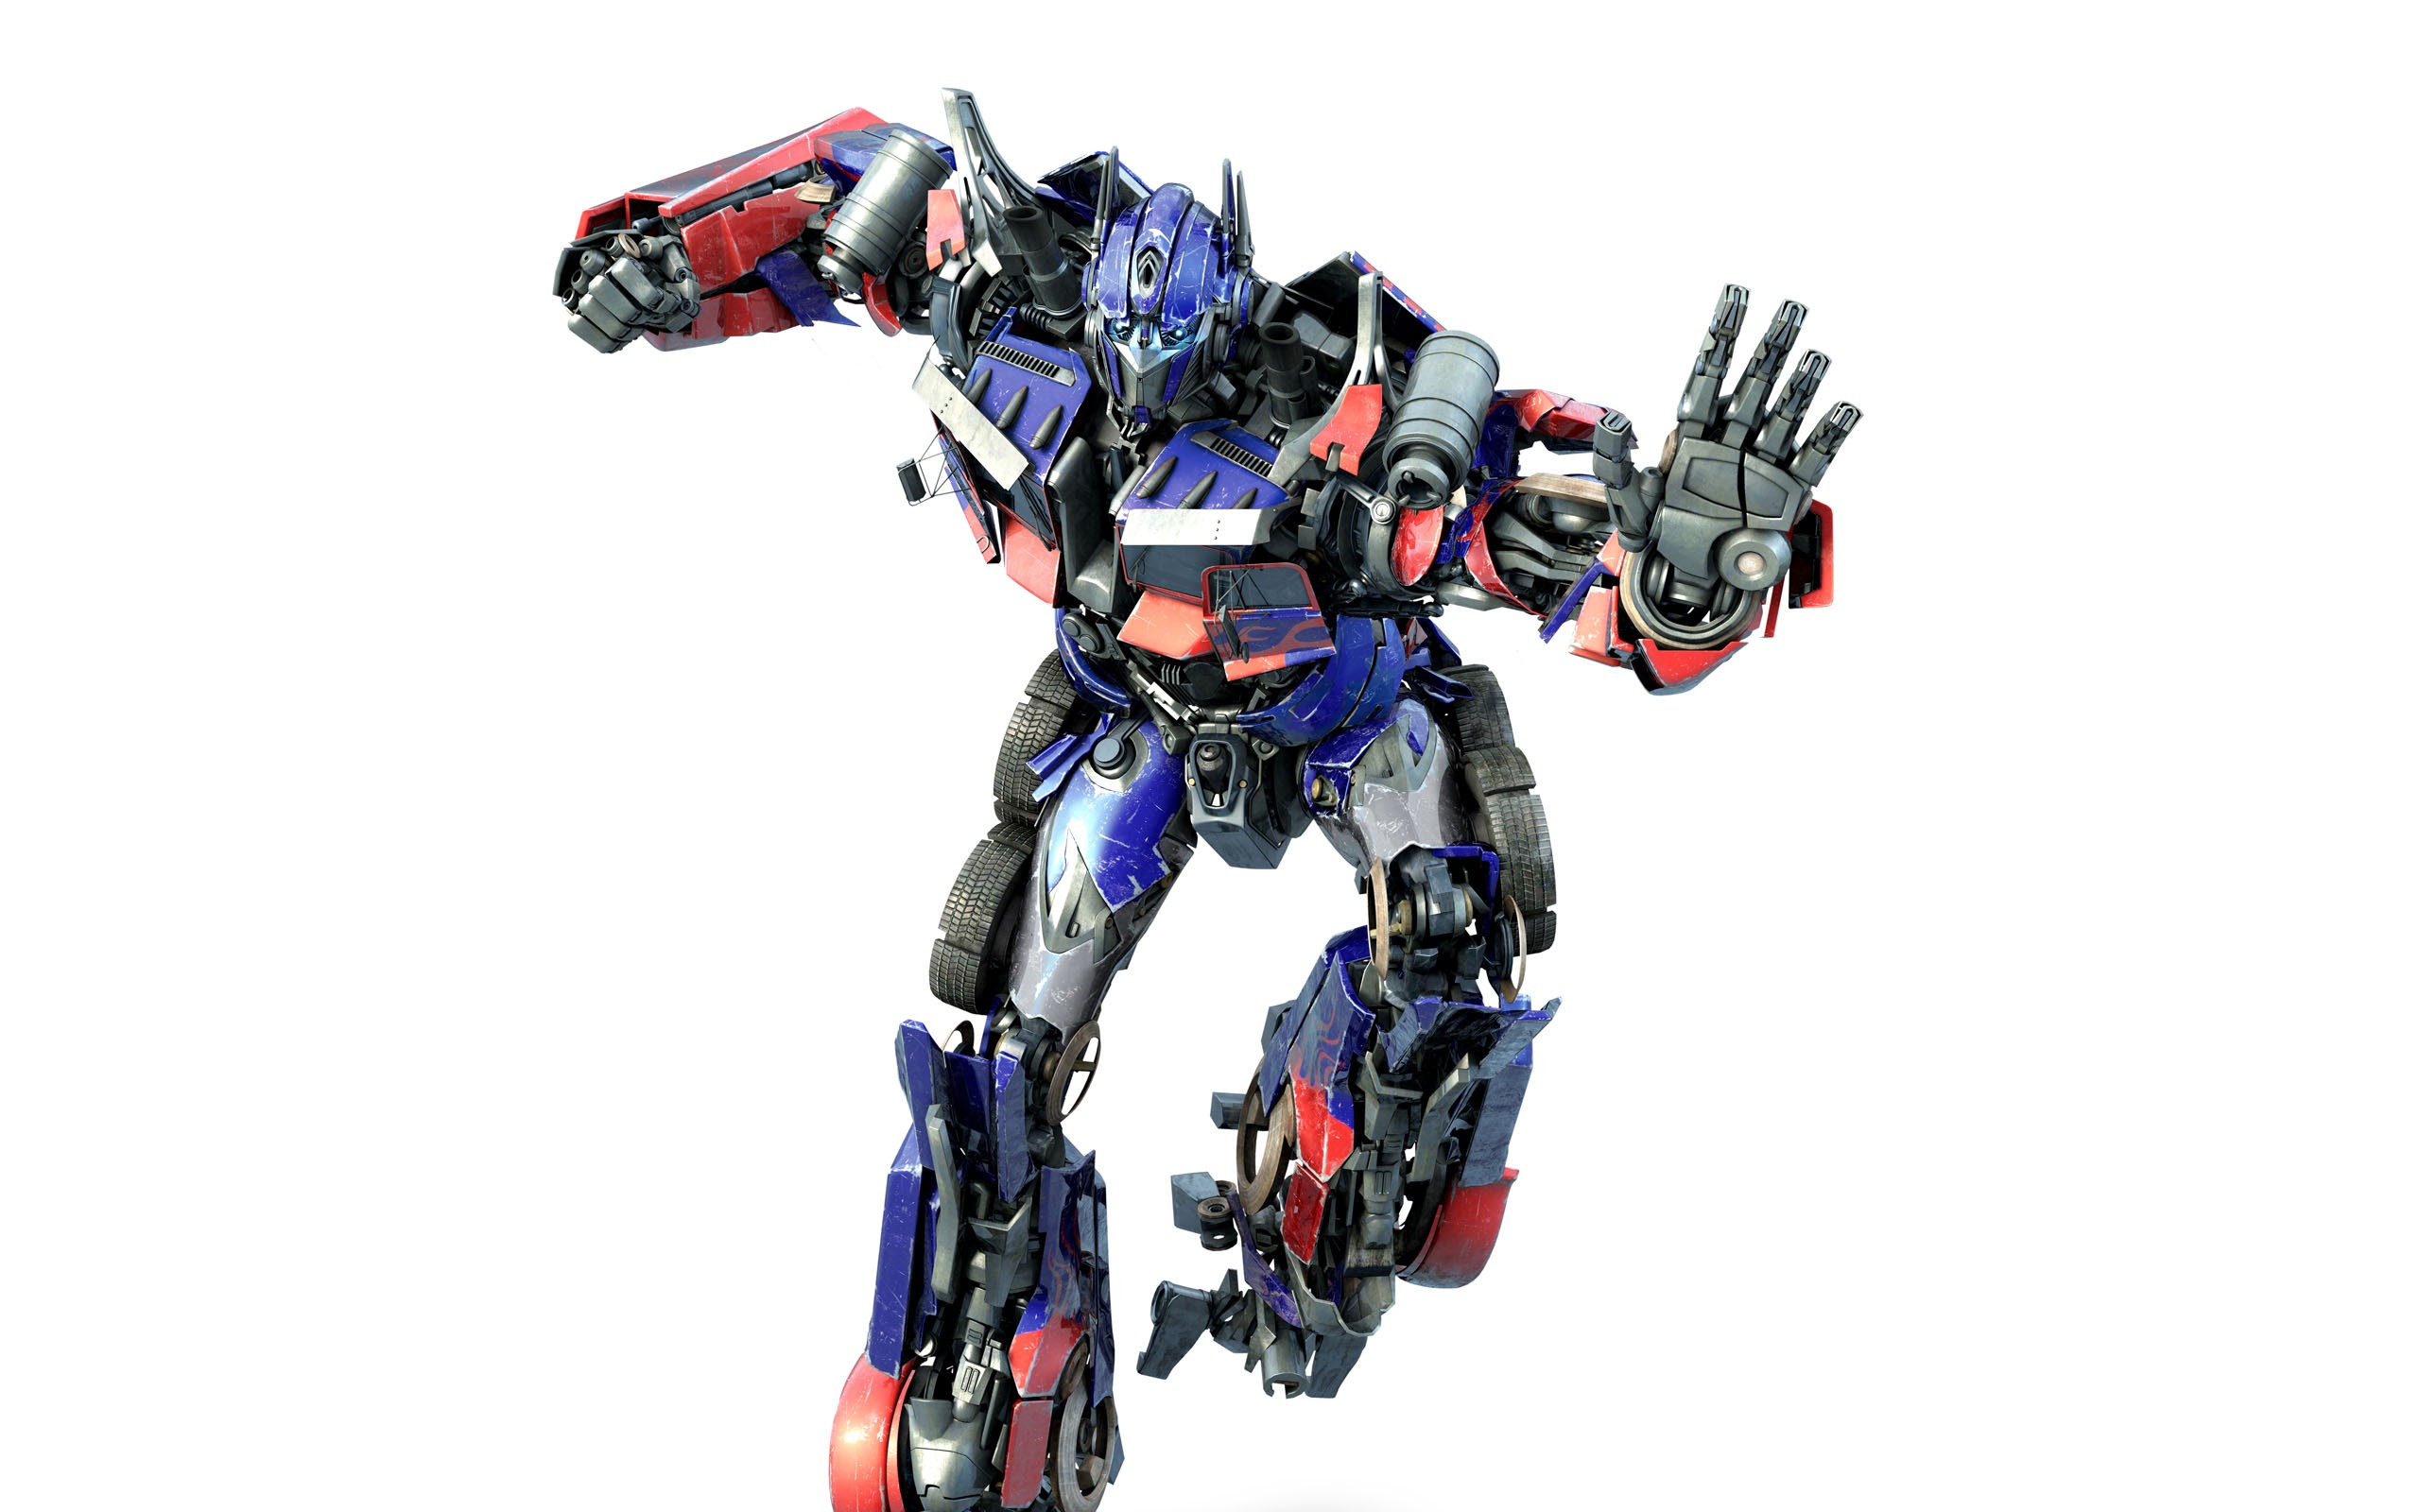 Transformers 2 HD Wallpaper Background 34207